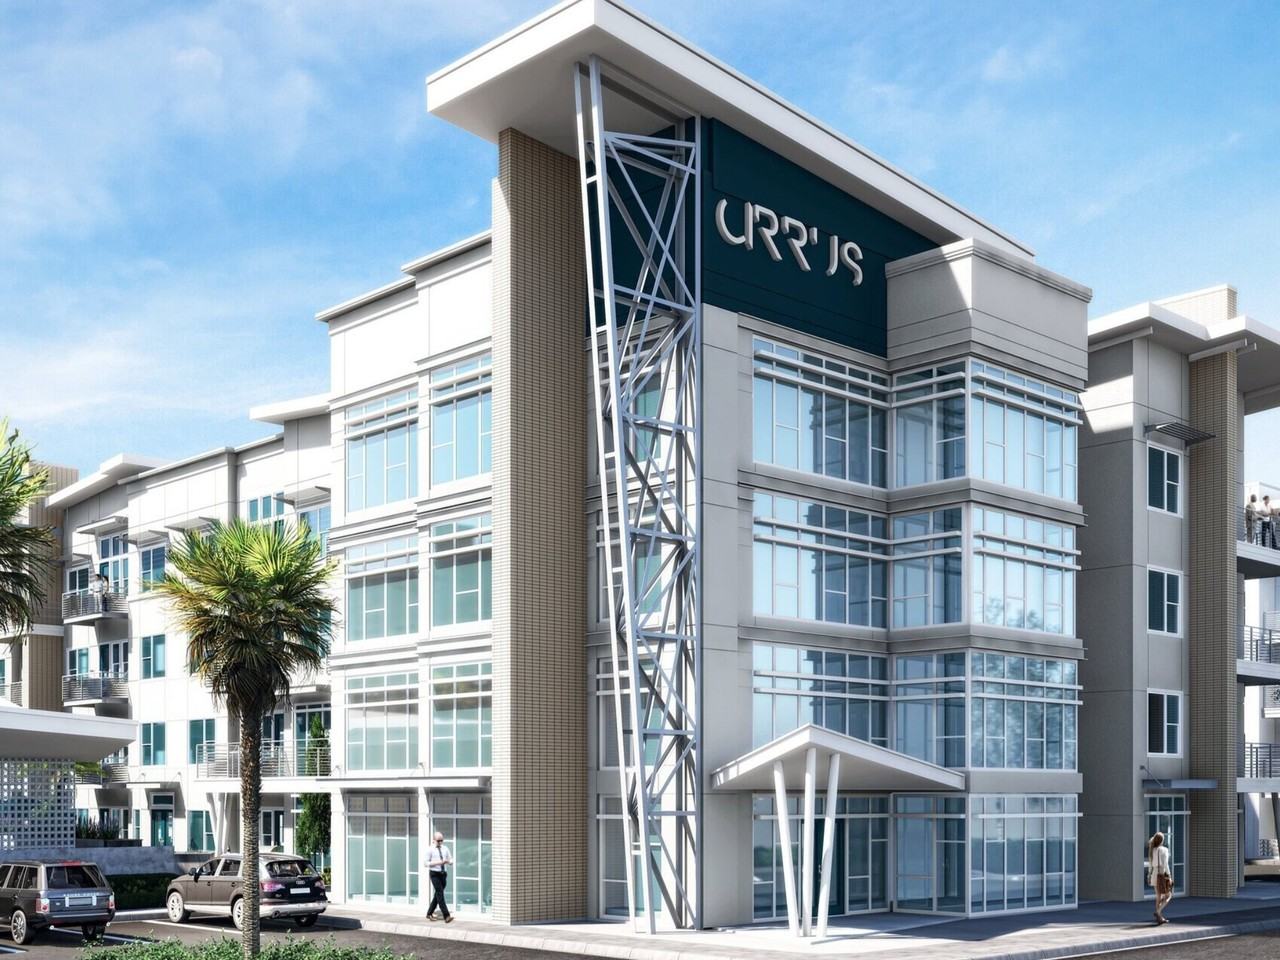 Apartments Near Academy of Cosmetology Cirrus Apartments for Academy of Cosmetology Students in Merritt Island, FL